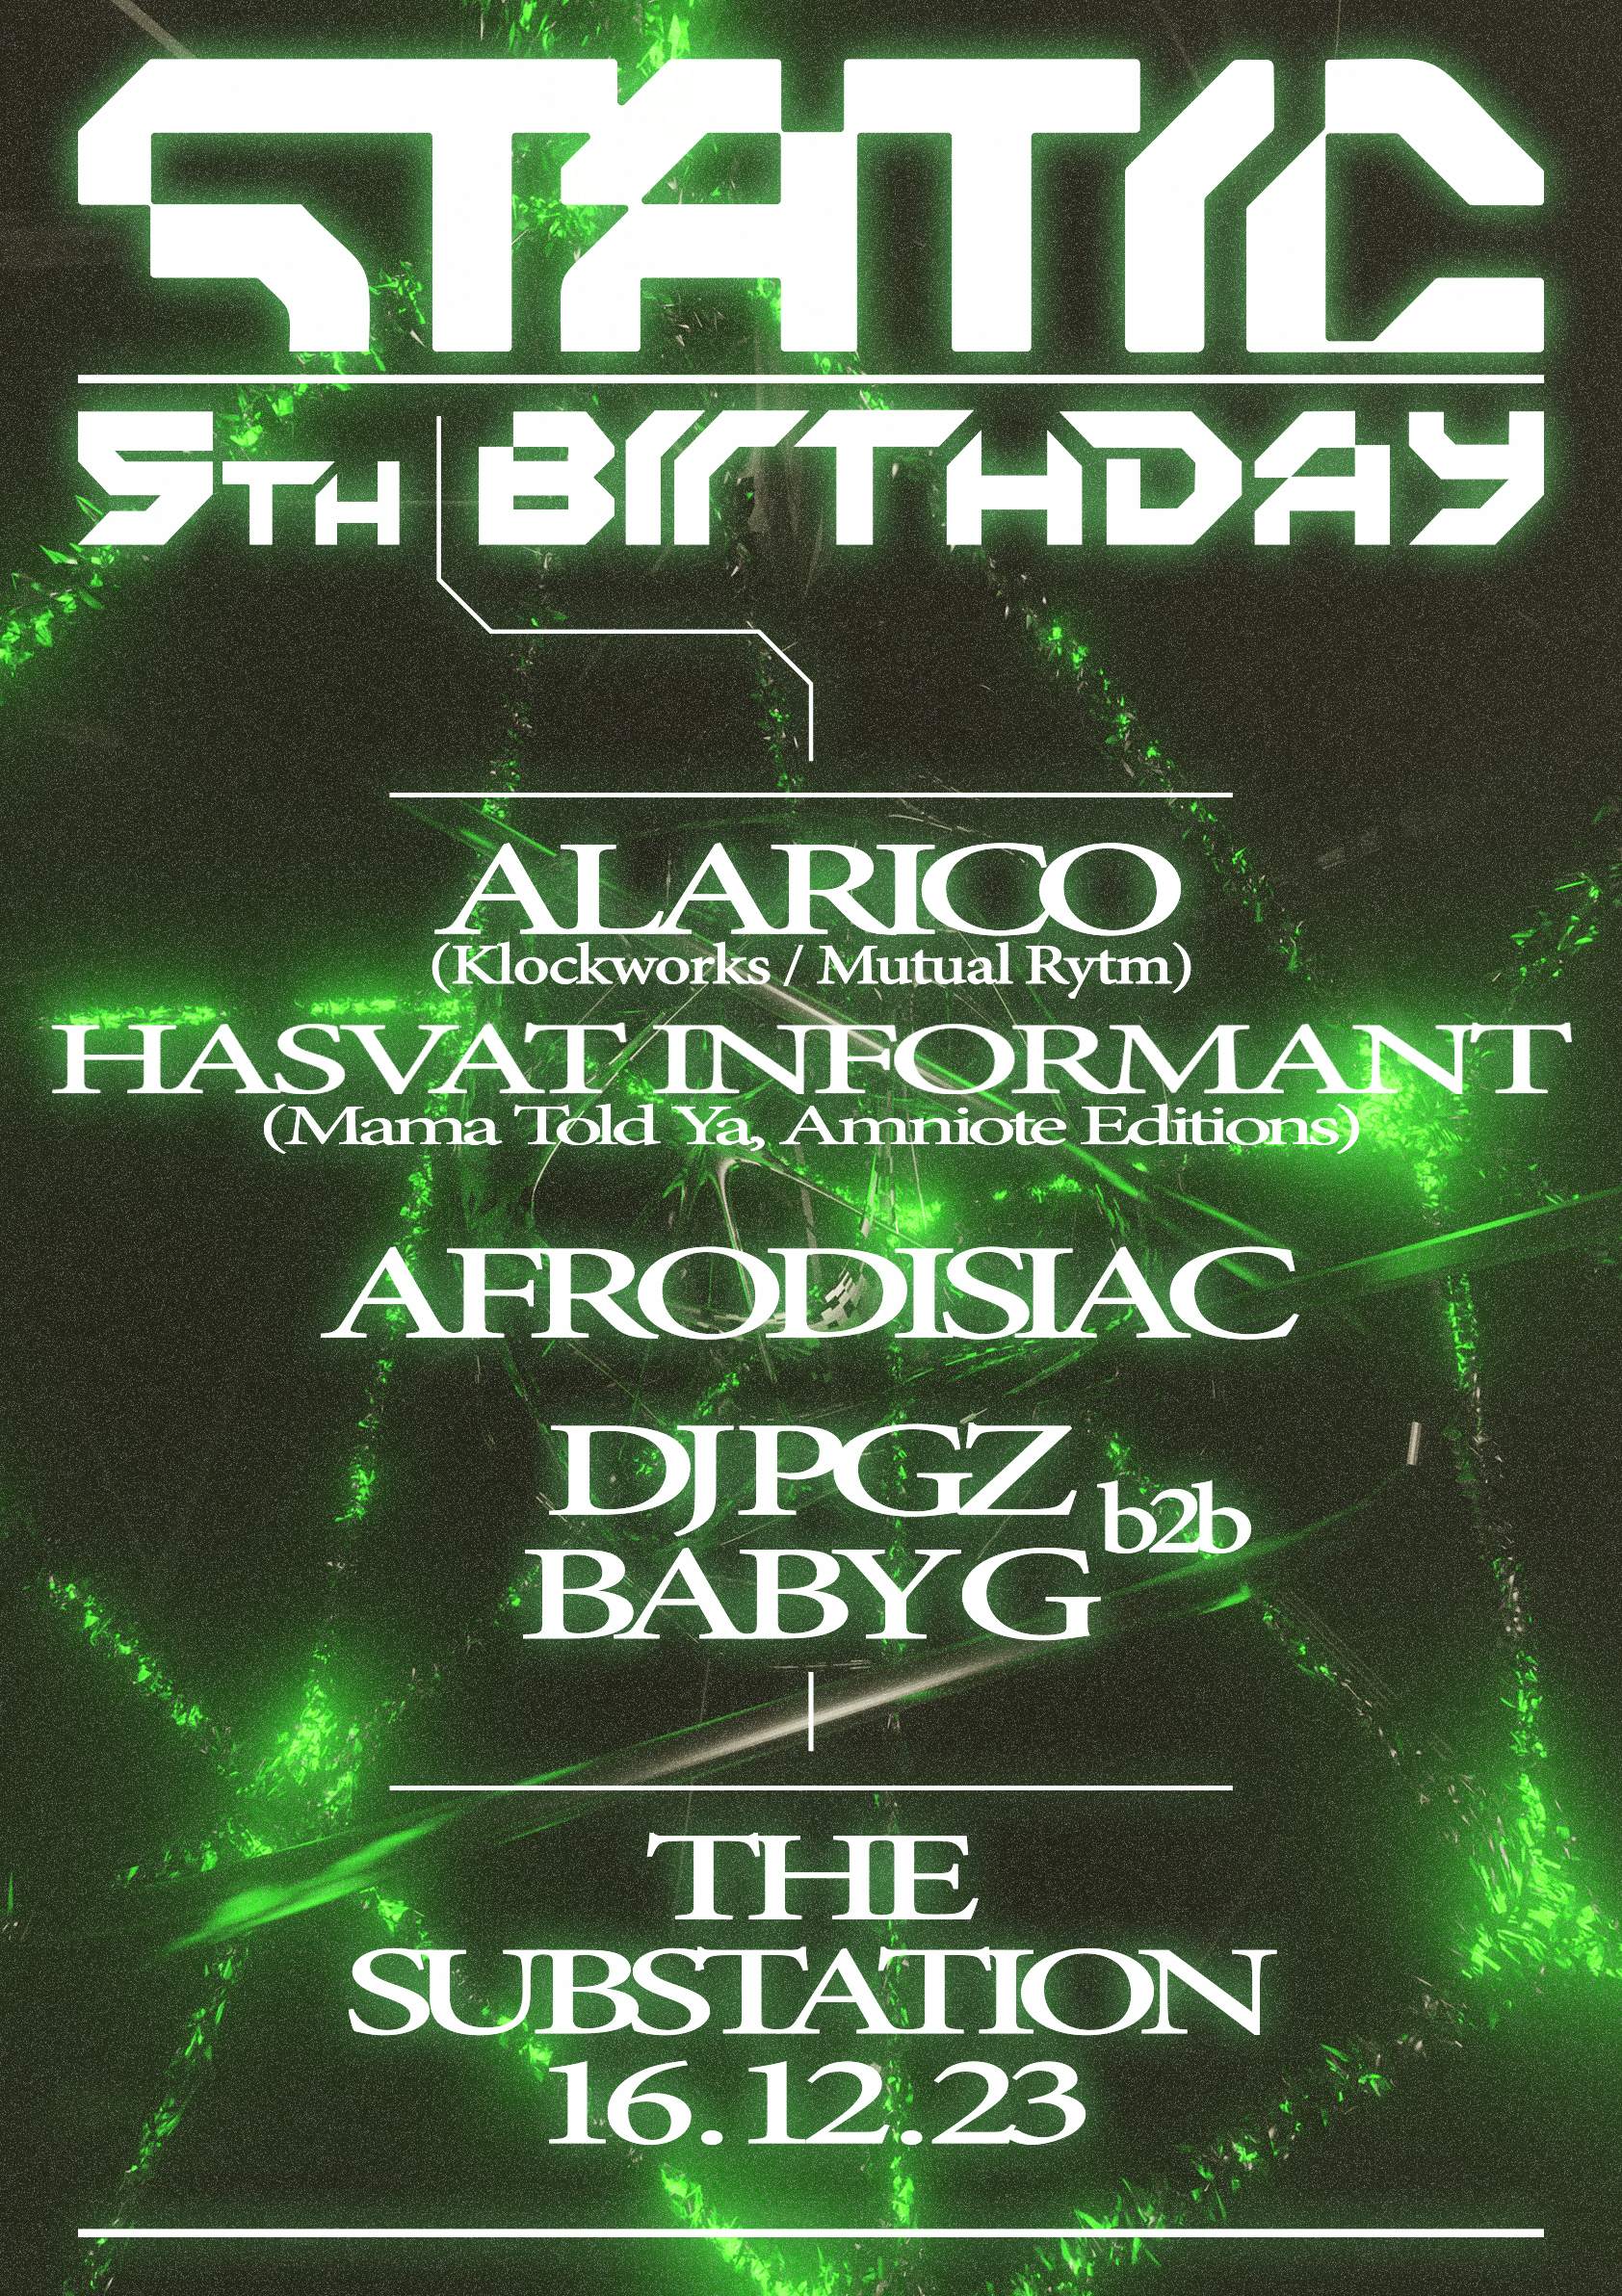 Static 5th Birthday with Alarico and dj pgz B2B Baby G - Página frontal